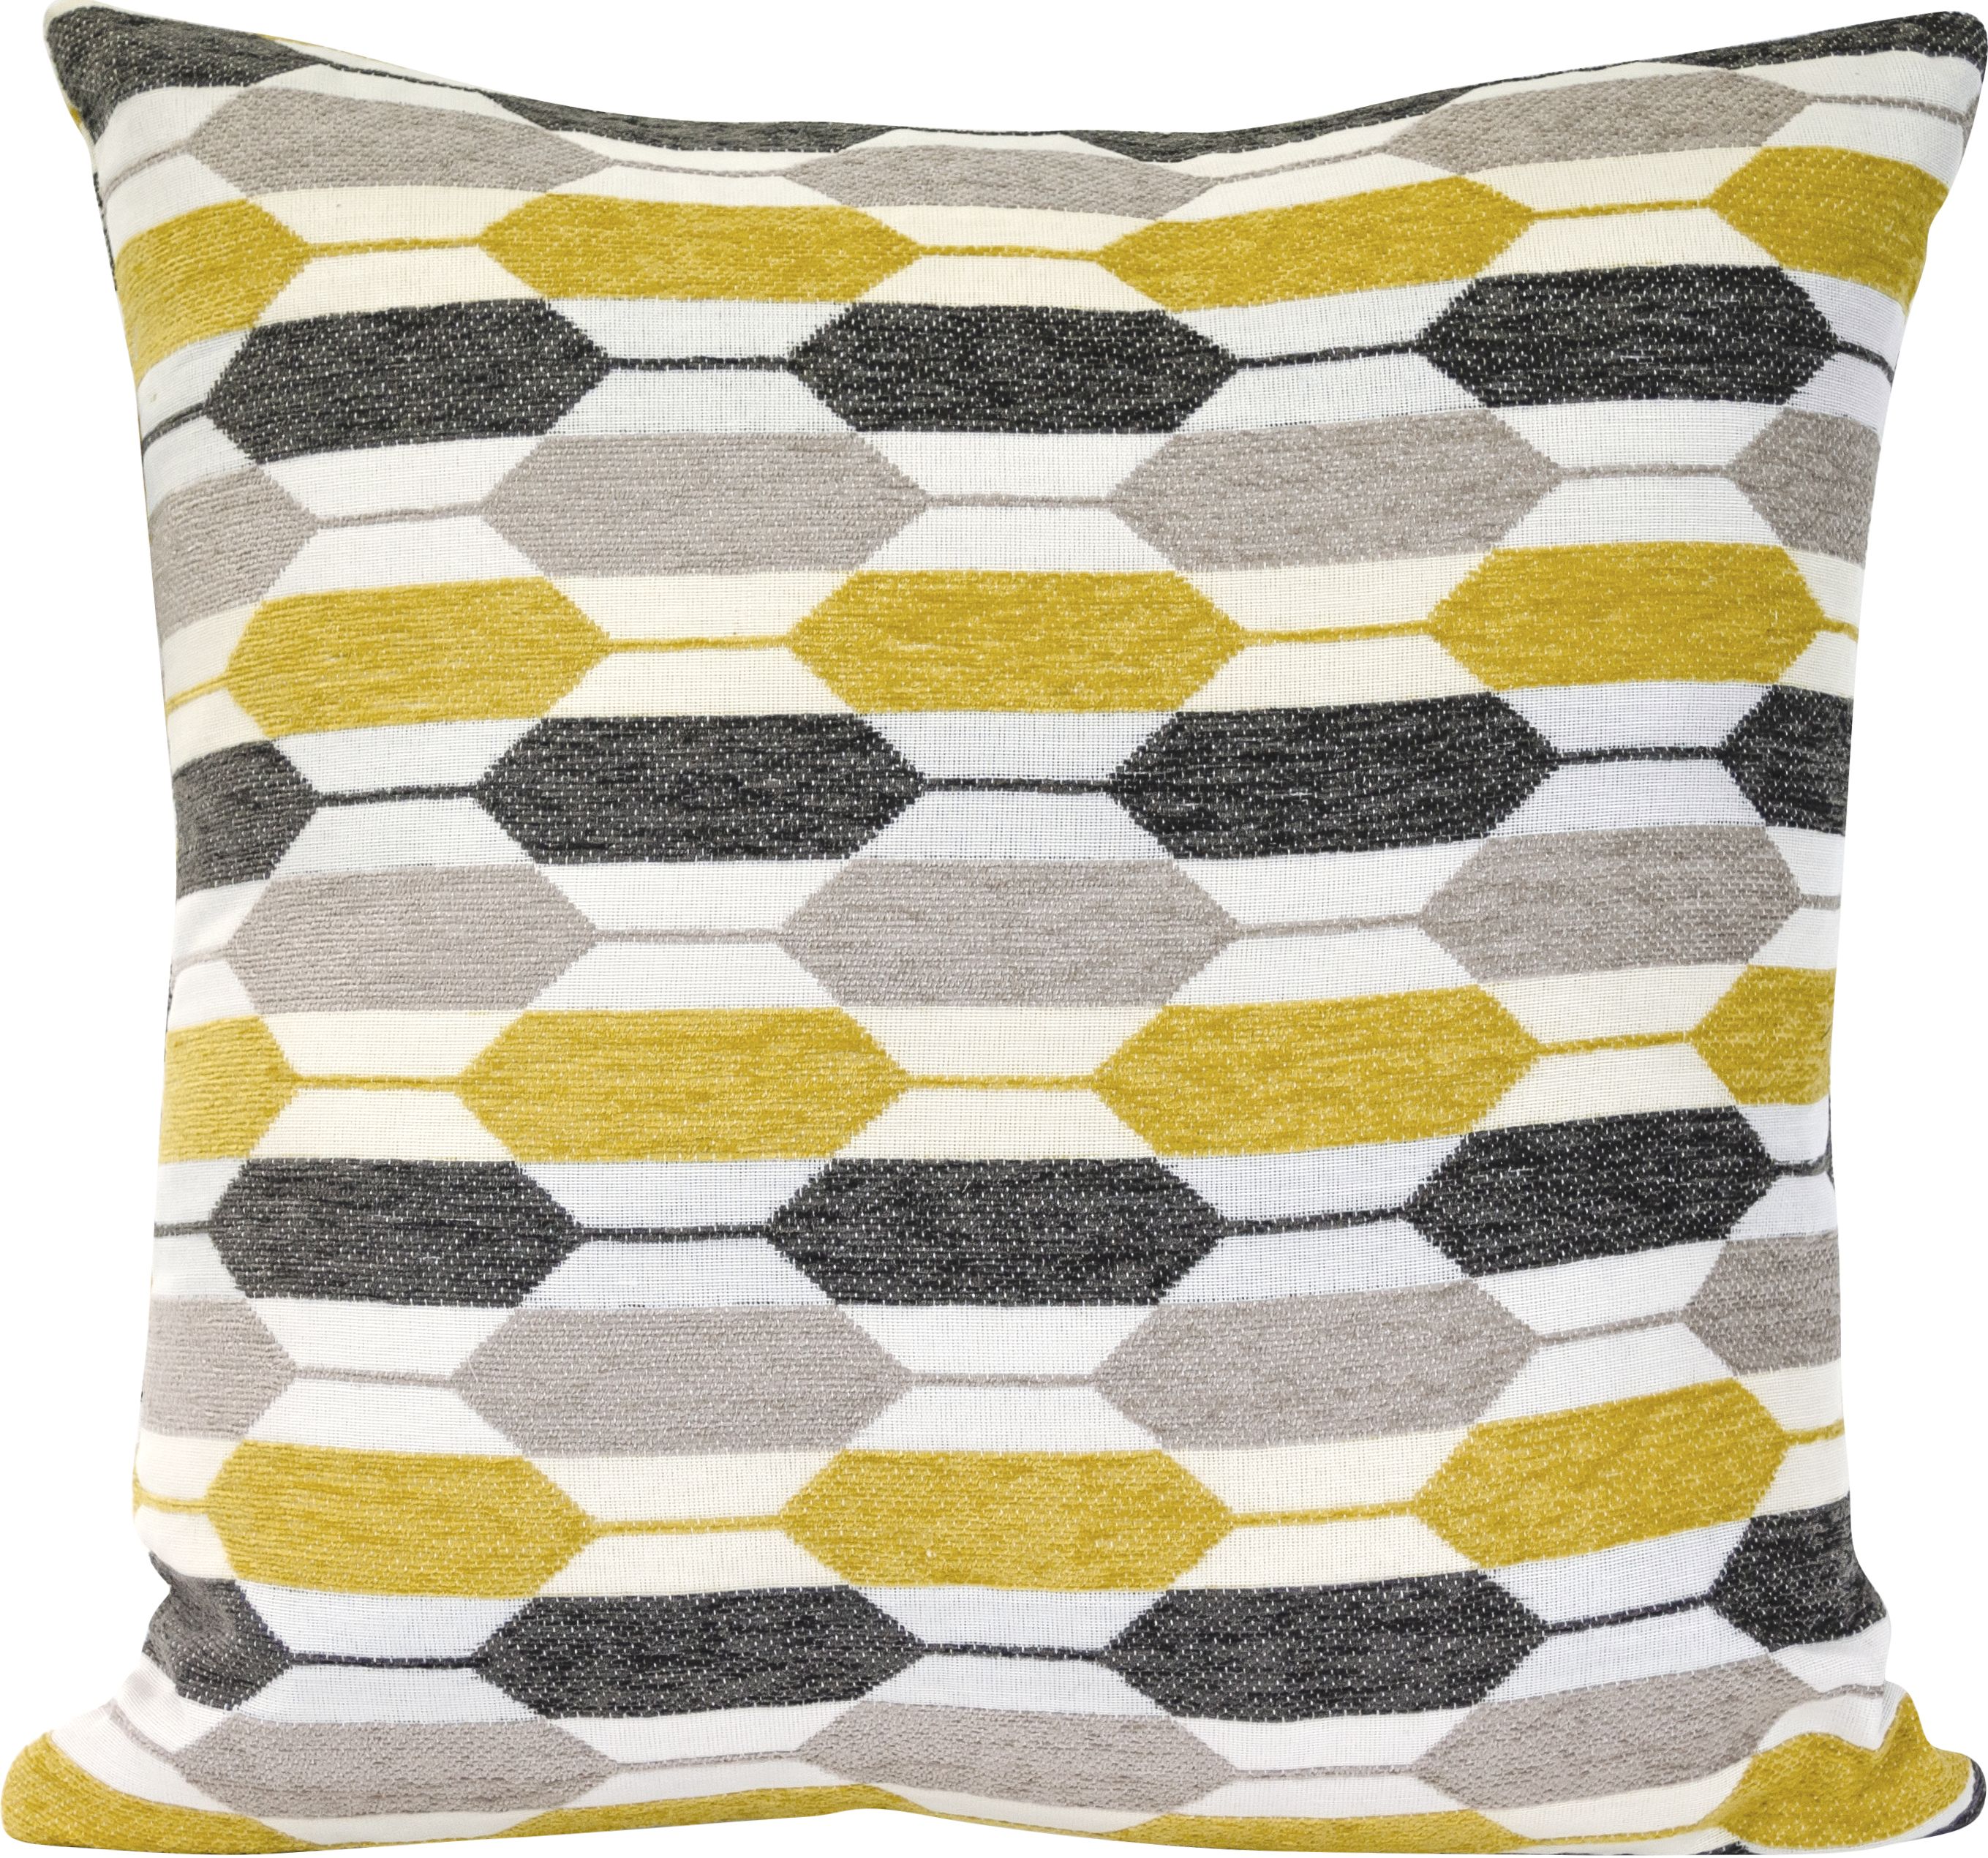 651018 20 X 20 In. Modern Hexagon Decorative Throw Pillow Cushion - Yellow & Grey, Square